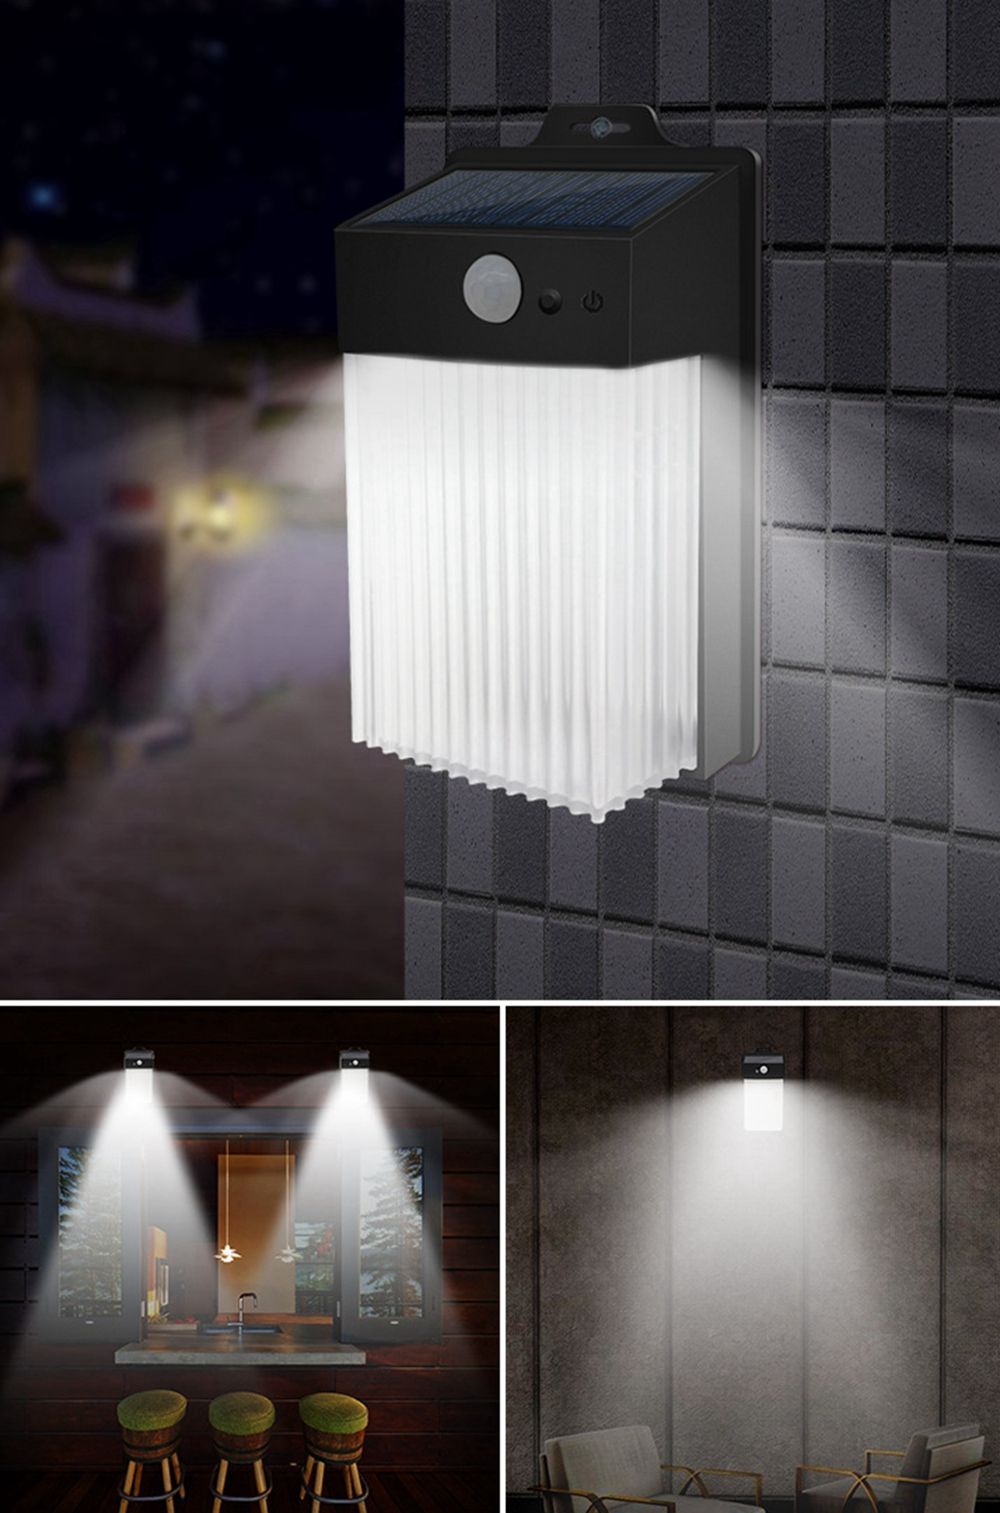 Solar-Power-50-LED-PIR-Motion-Sensor-Wall-Light-Waterproof-Outdoor-Path-Yard-Garden-Security-Lamp-1566021